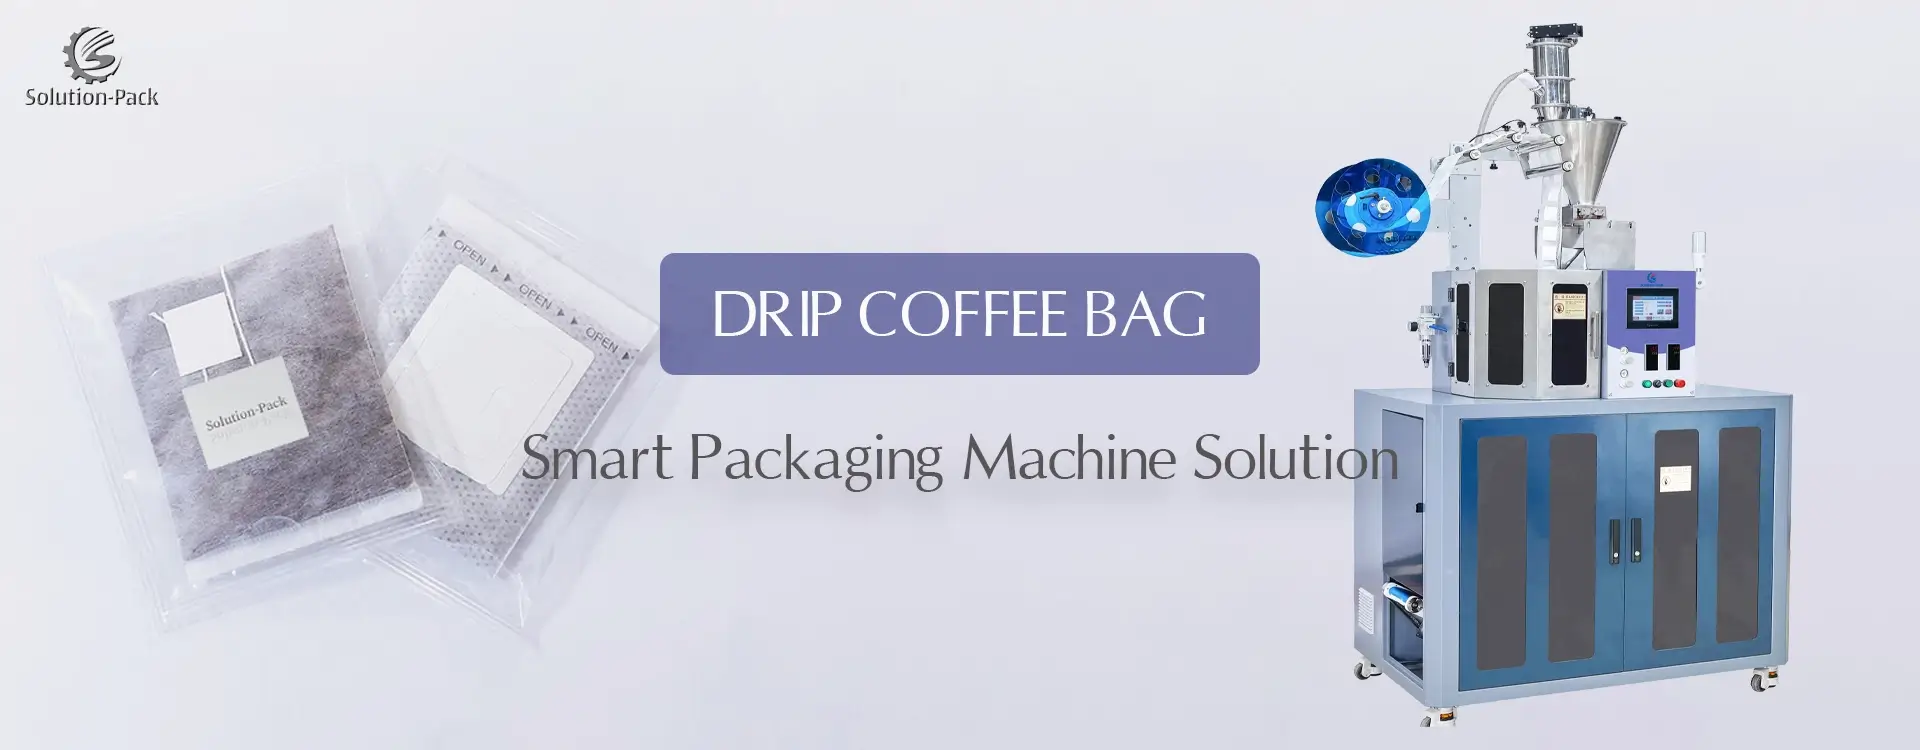 Drip Coffee Bag Packaging Machine | Solution-Pack